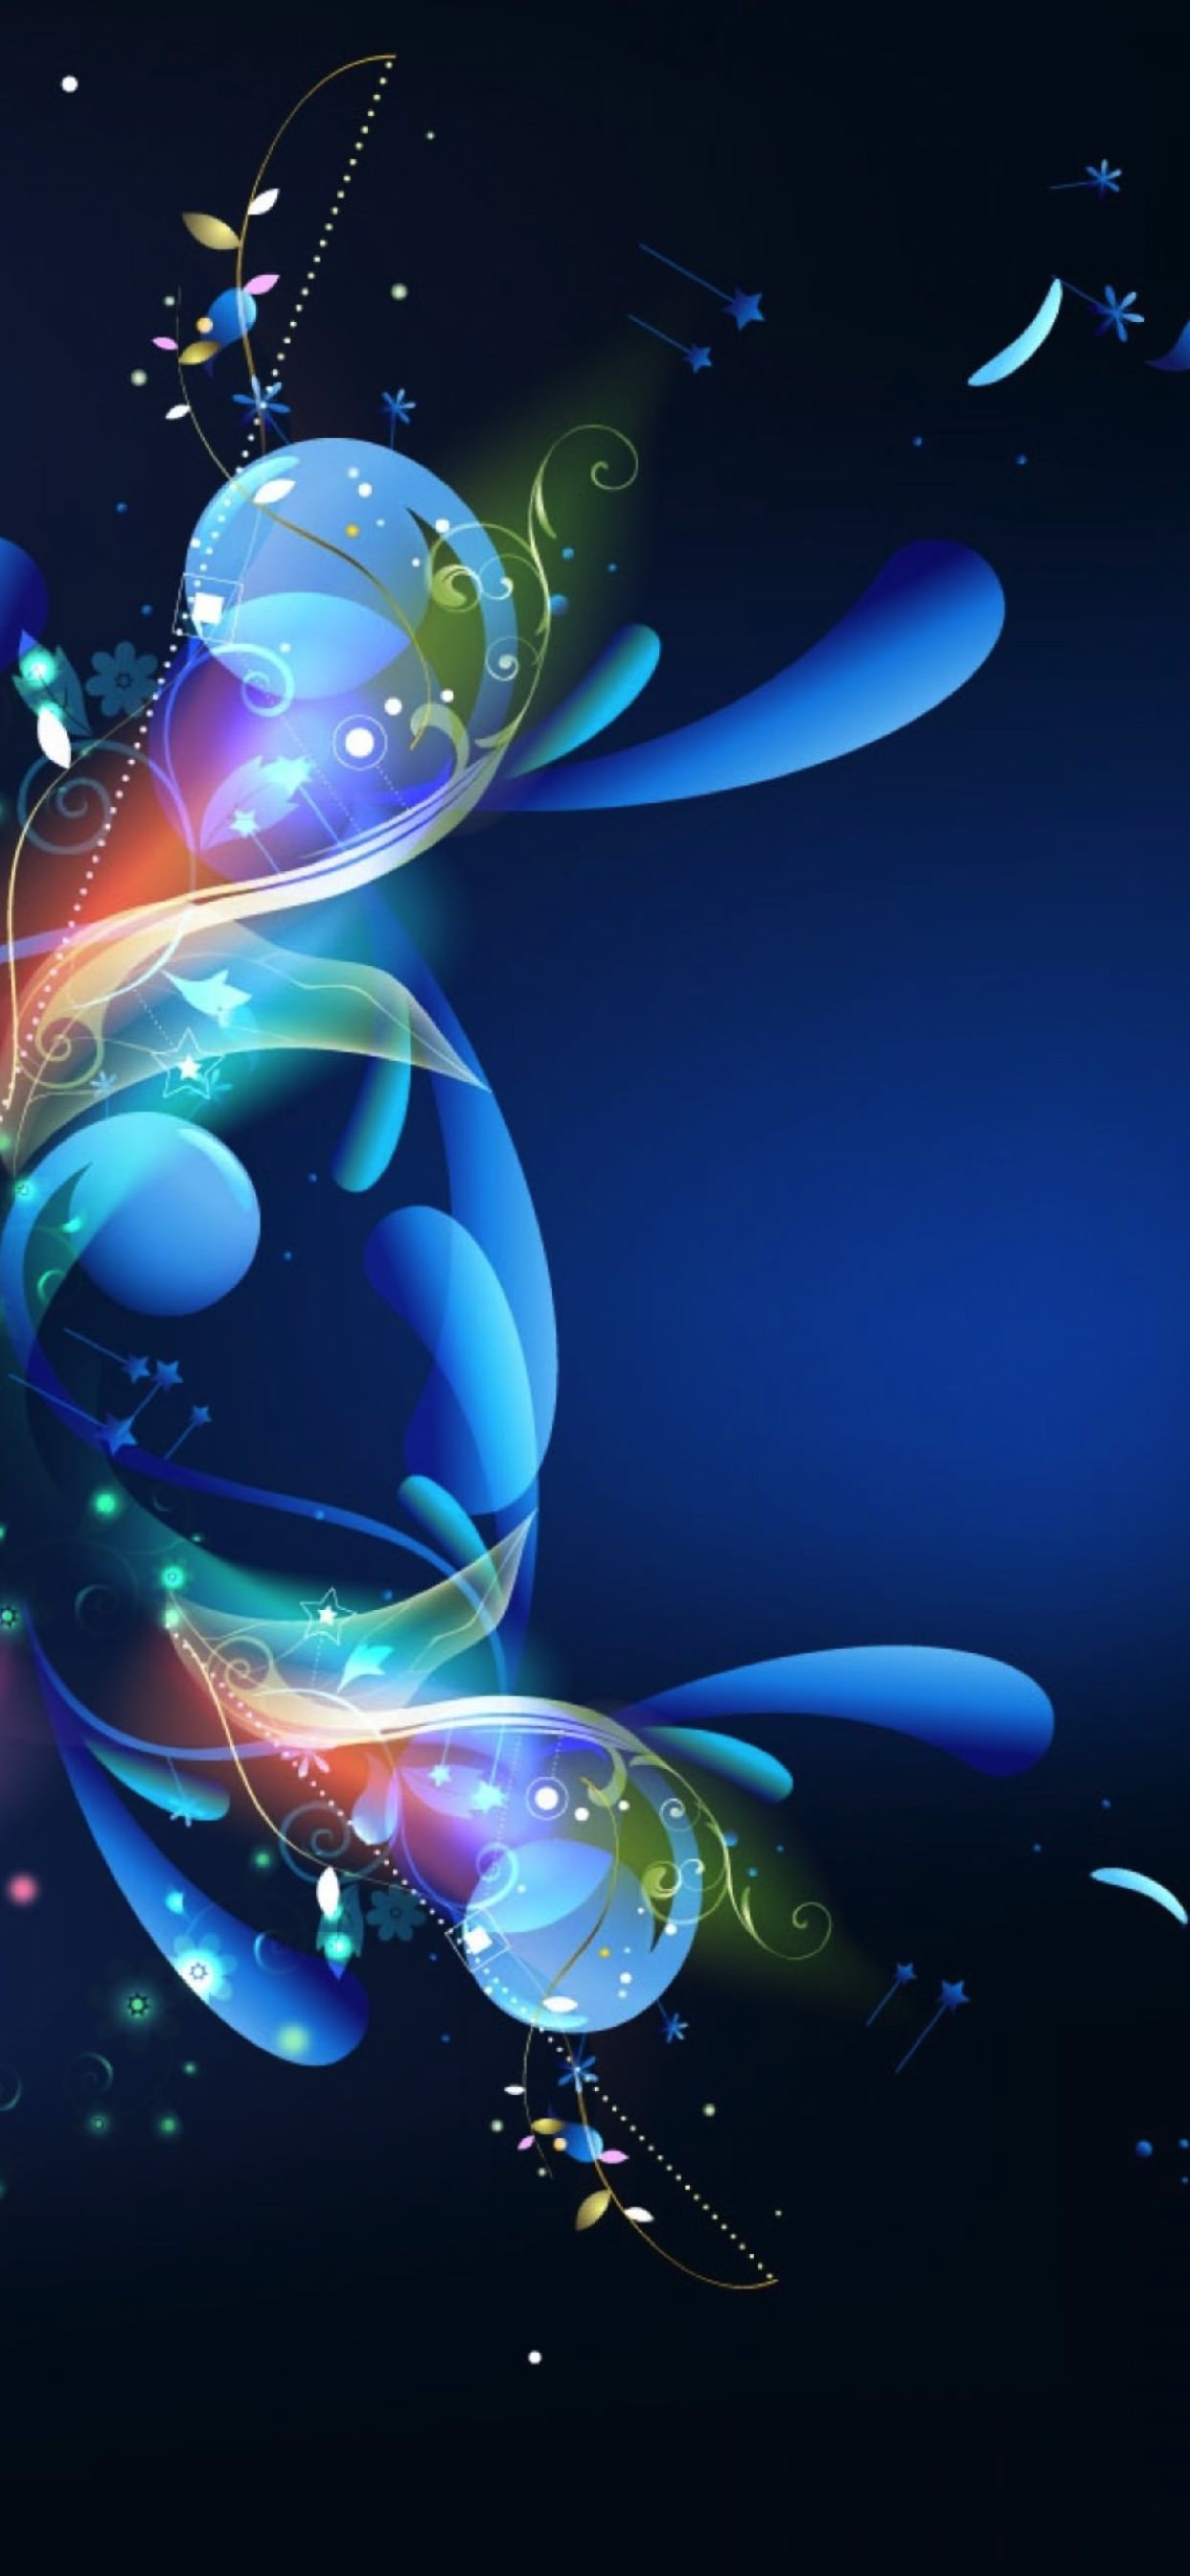 Pattern blue | wallpaper.sc iPhone XS Max